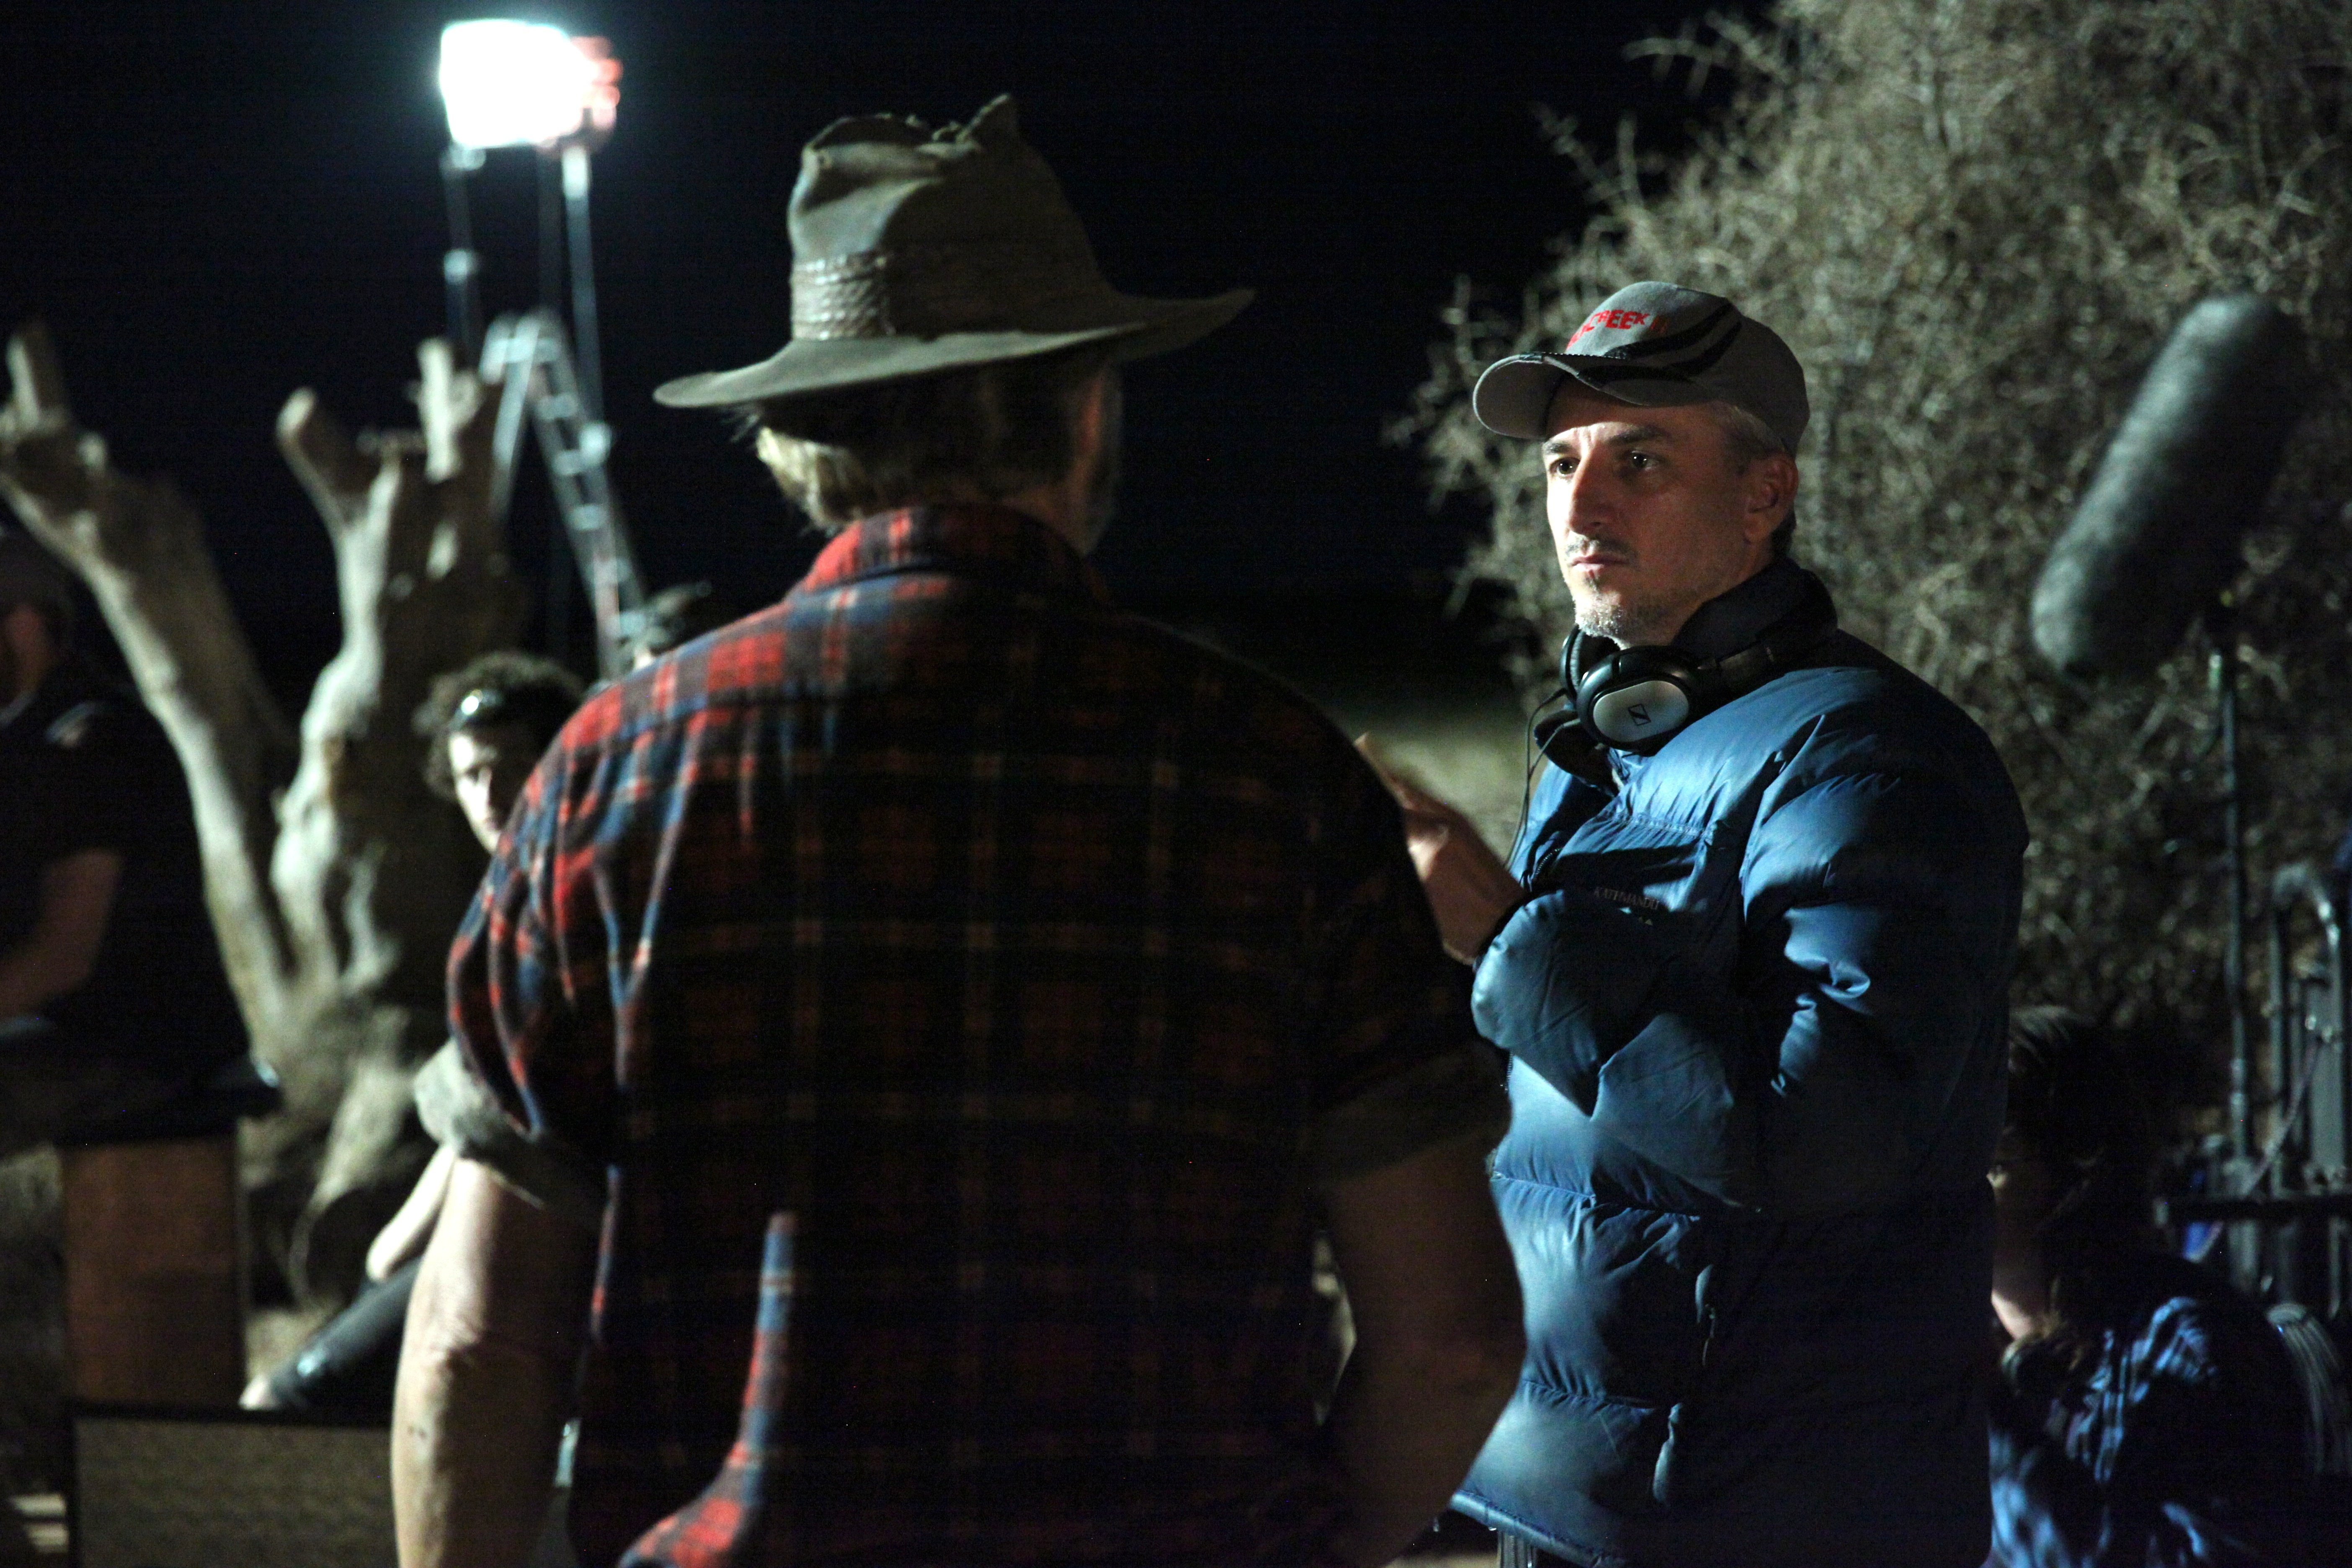 Actor John Jarratt and Director Greg McLean on the set of Wolf Creek 2